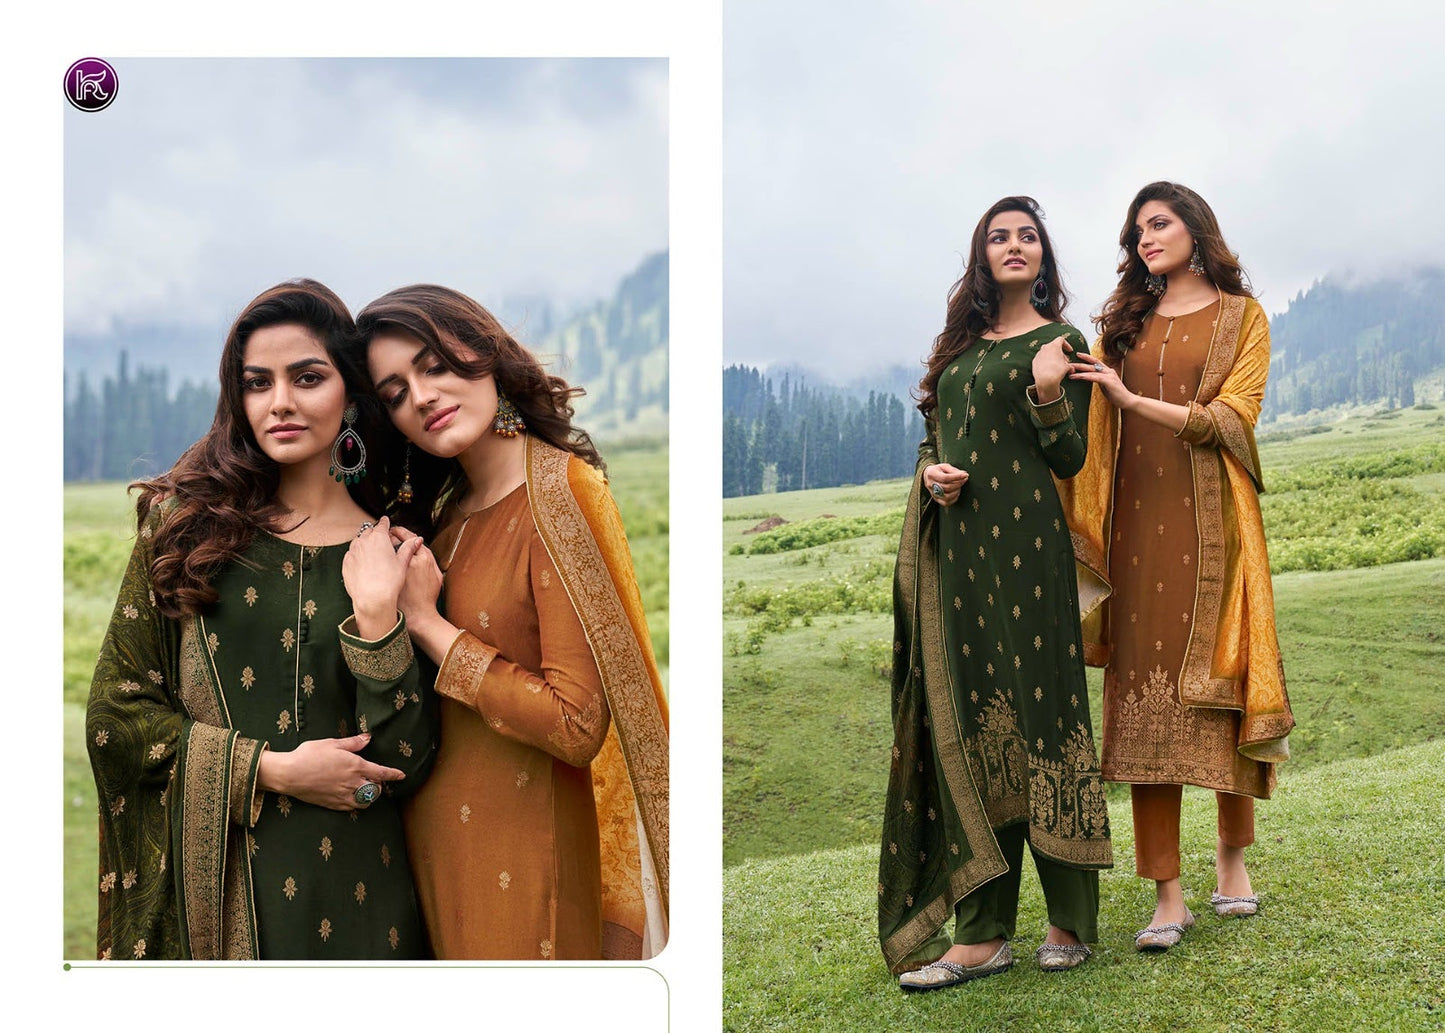 Kala Print 2 Kala Fashion Viscose Pashmina Suits